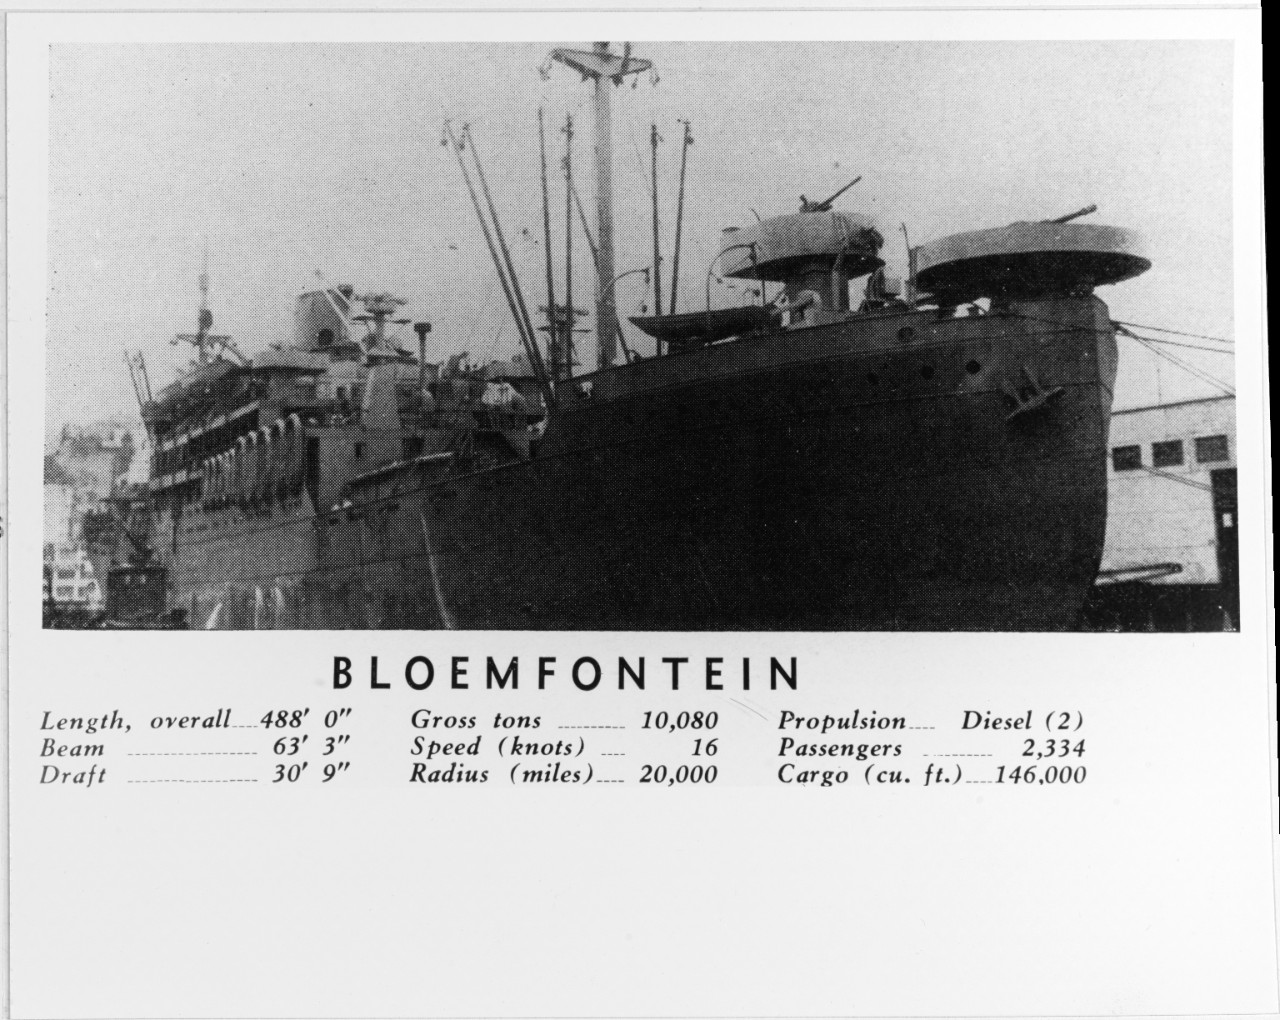 SS BLOEMFONTEIN